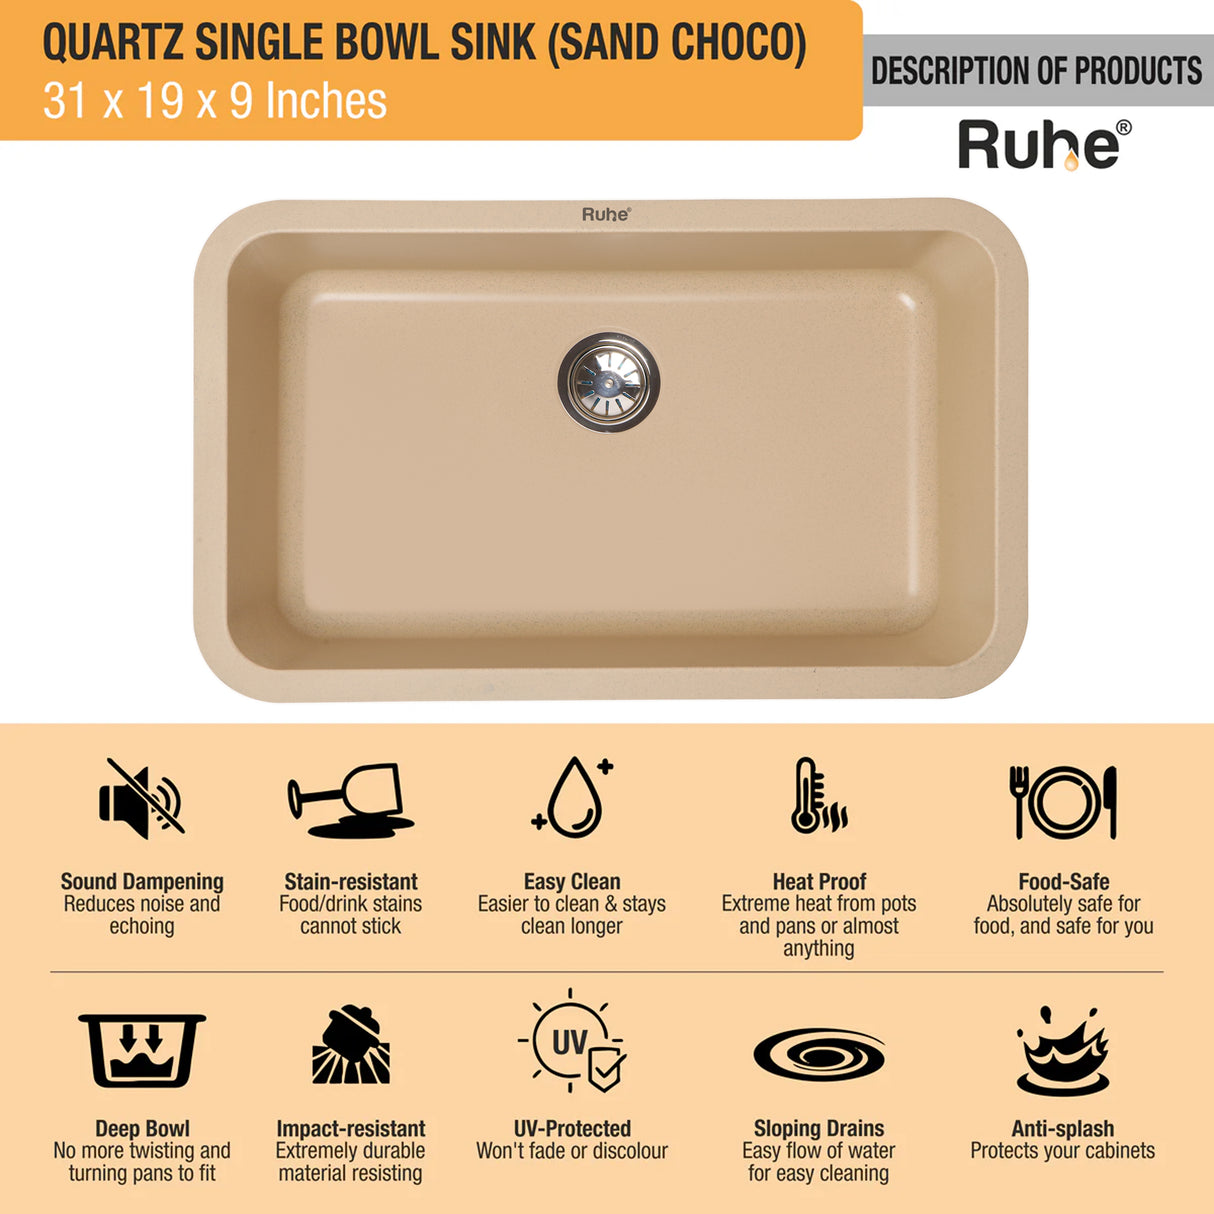 Quartz Single Bowl Kitchen Sink - Sand Choco (31 x 19 x 9 inches) - by Ruhe®